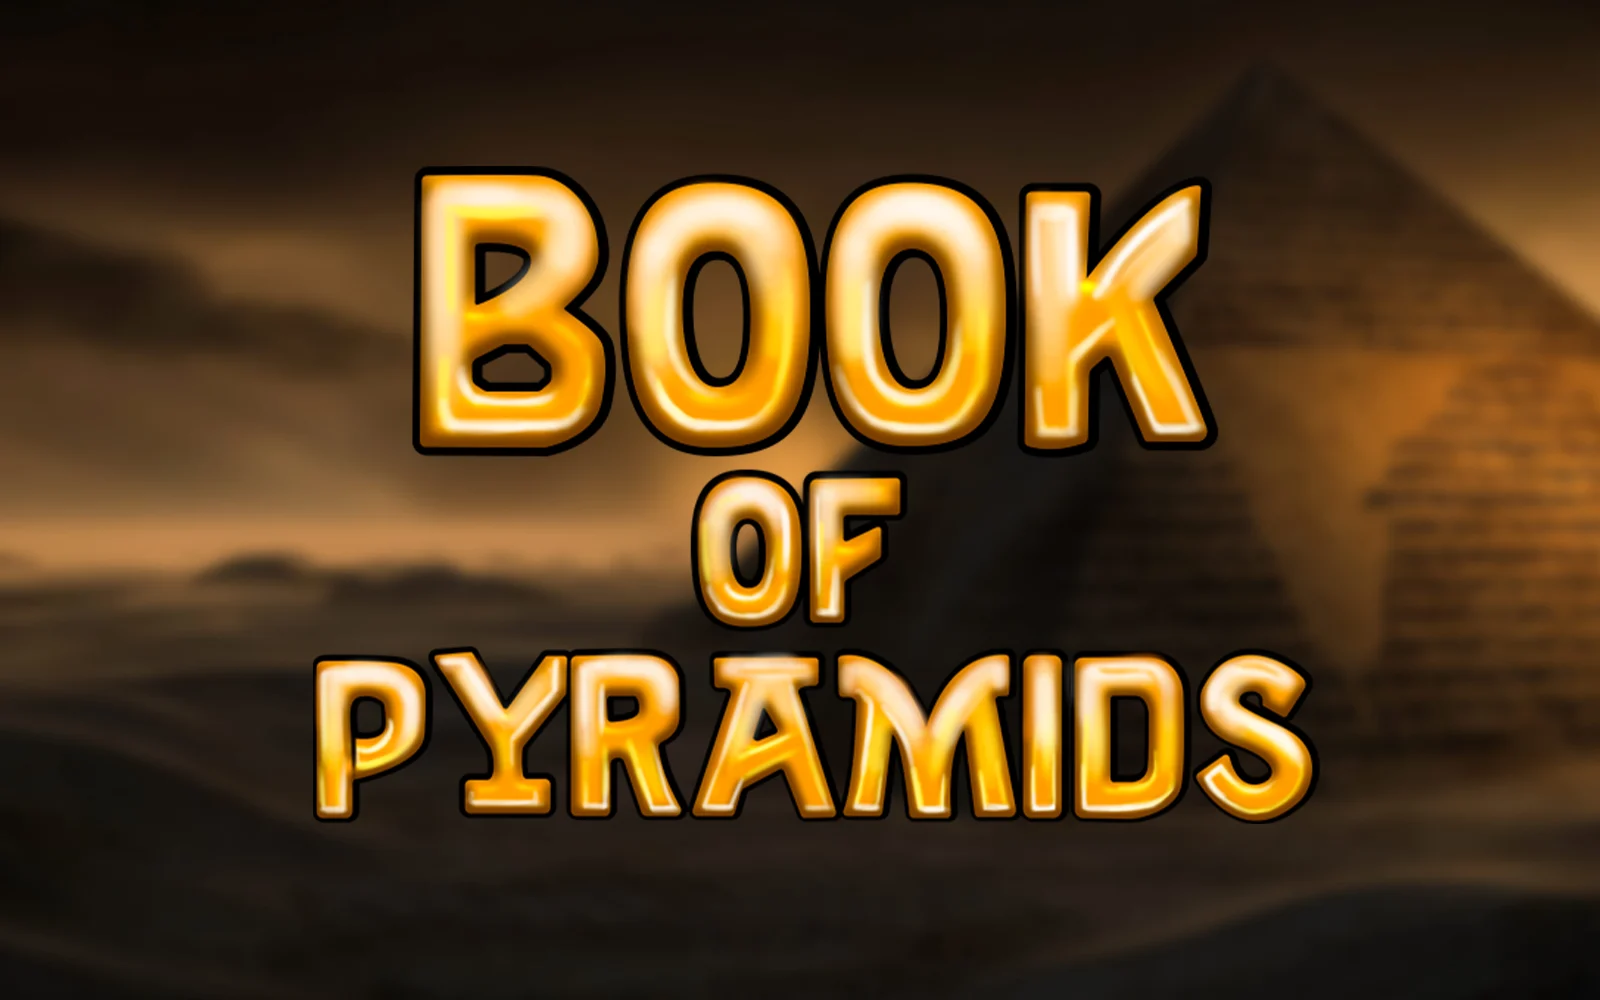 Joacă Book of Pyramids în cazinoul online Starcasino.be